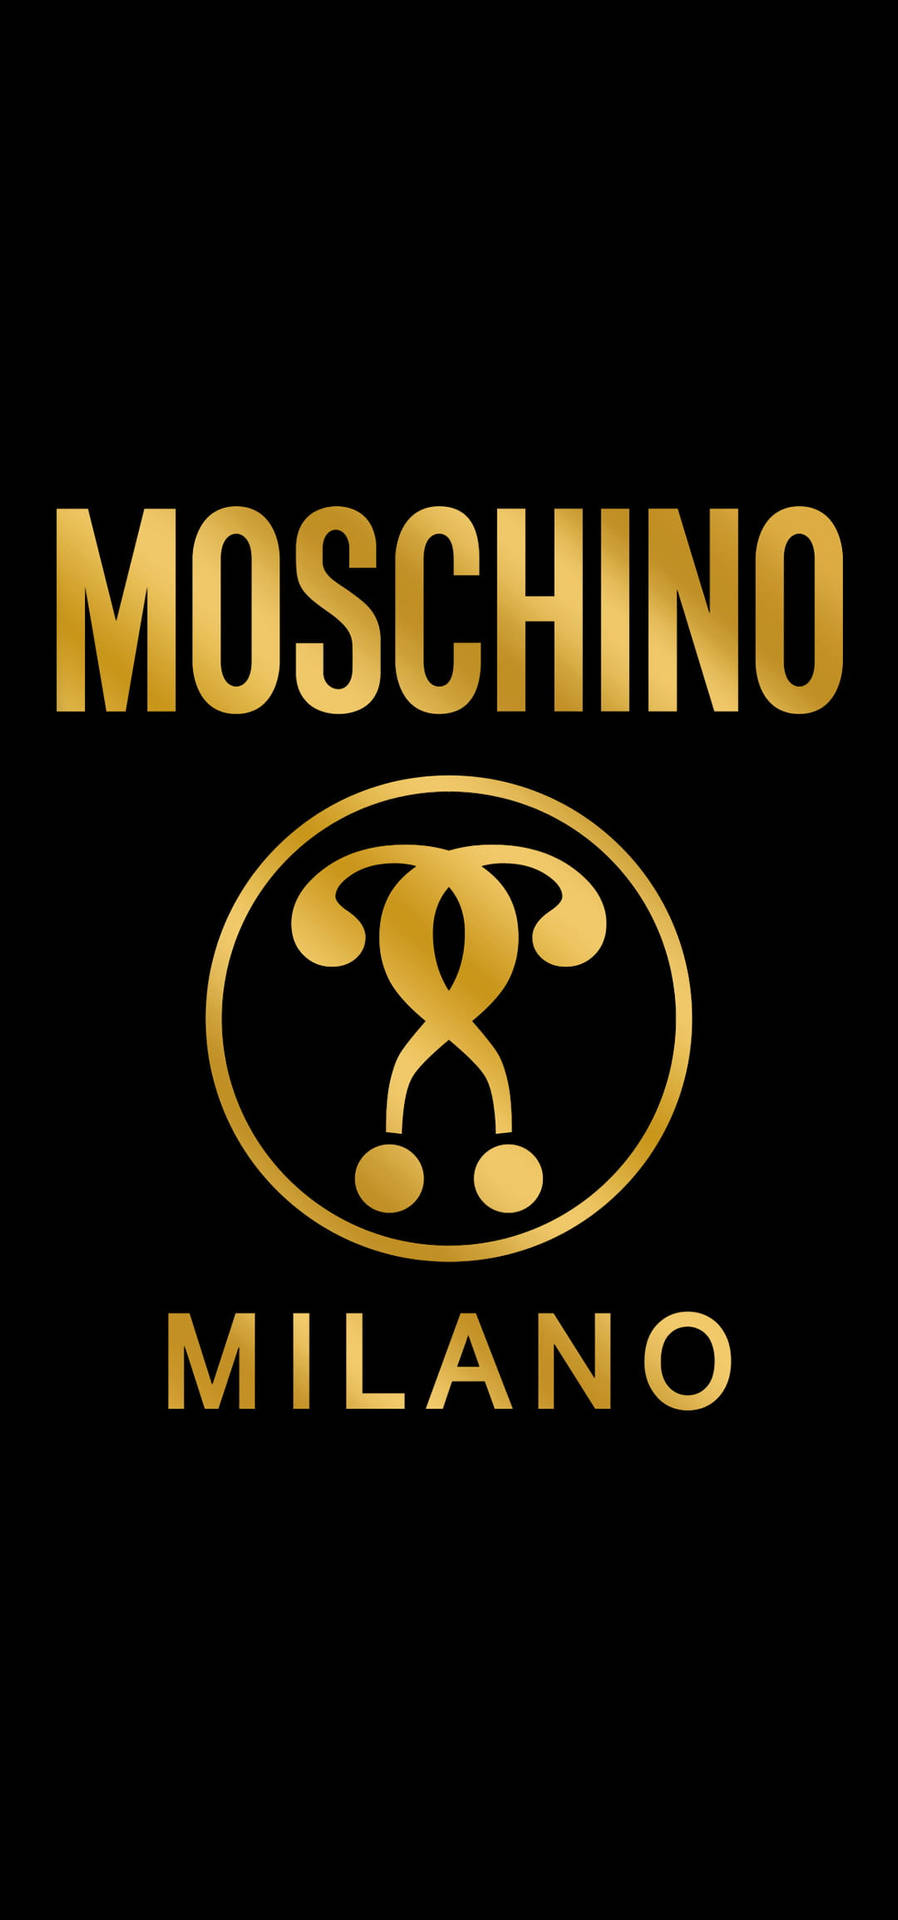 Moschino 1080 X 2310 Wallpaper